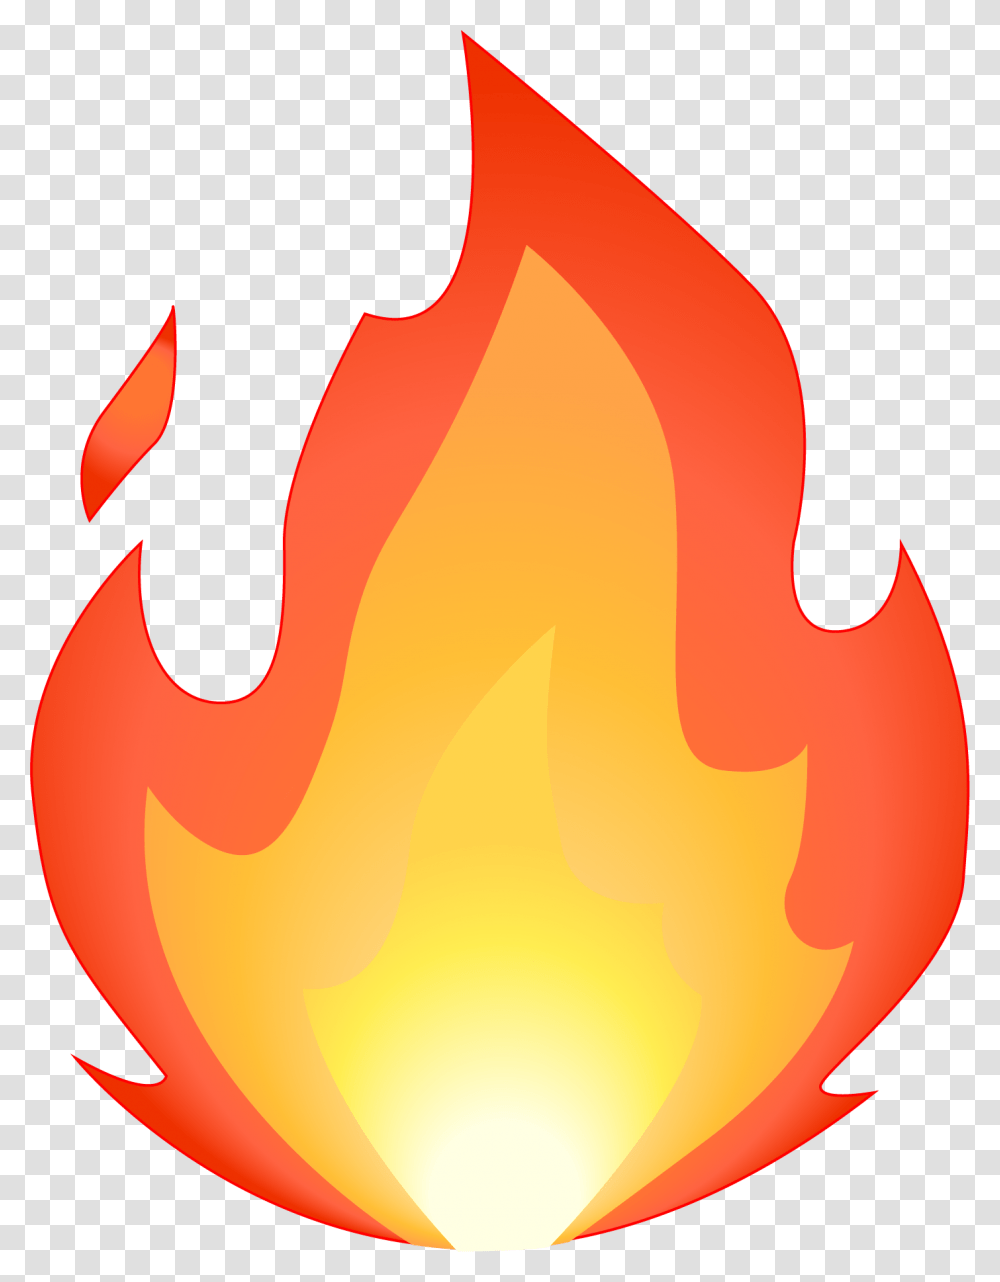 Negative Peer Pressure Clipart Apple Fire Emoji, Flame, Bonfire Transparent Png